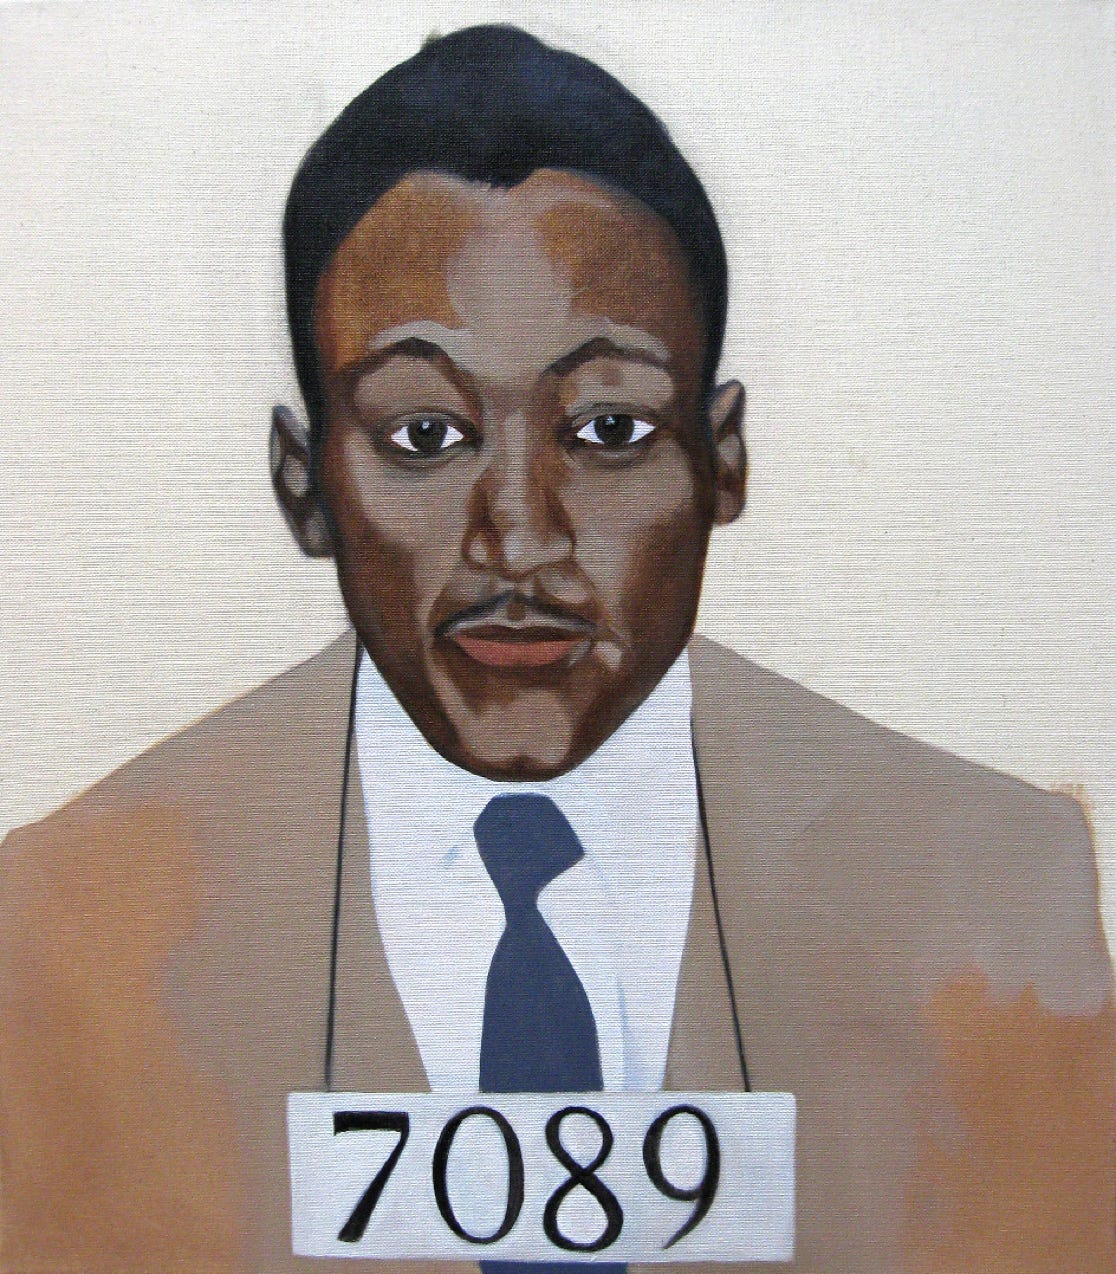 55x48 cm, oil on canvas, 2010